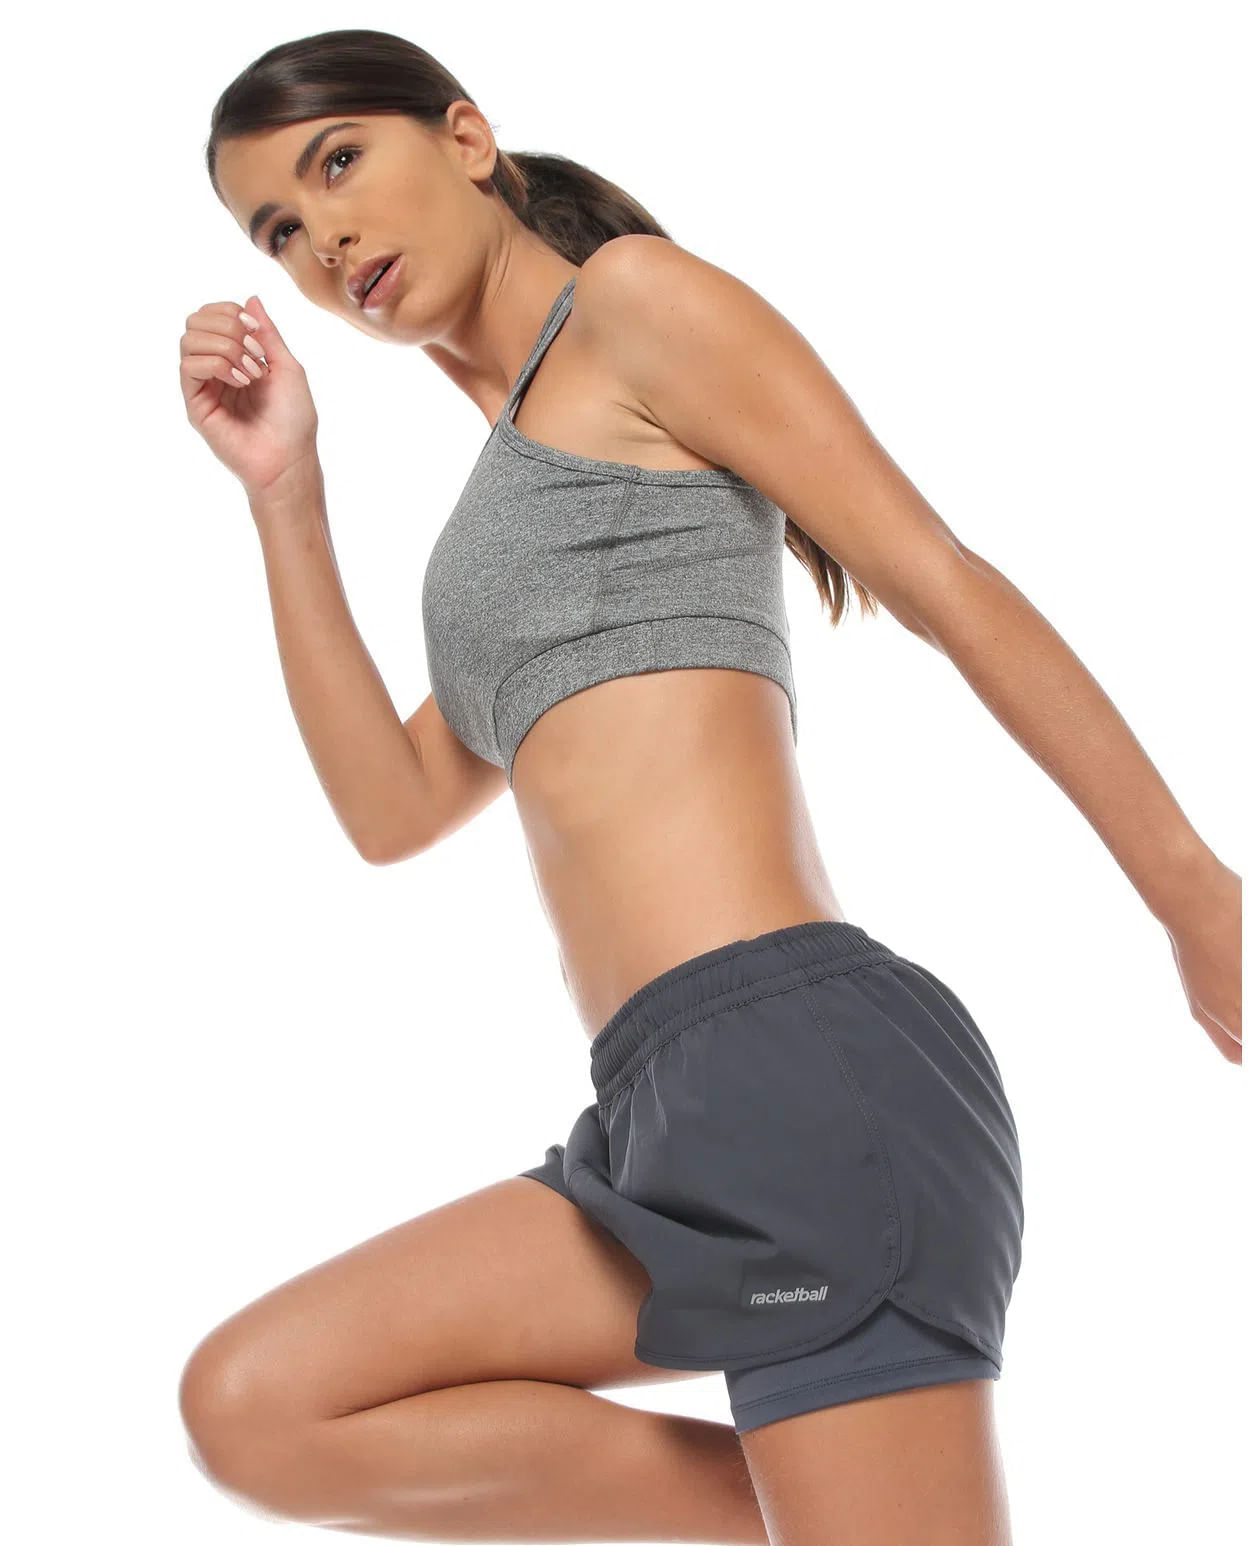 modelo con Pantaloneta Running Deportiva Gris y top deportivo para Mujer